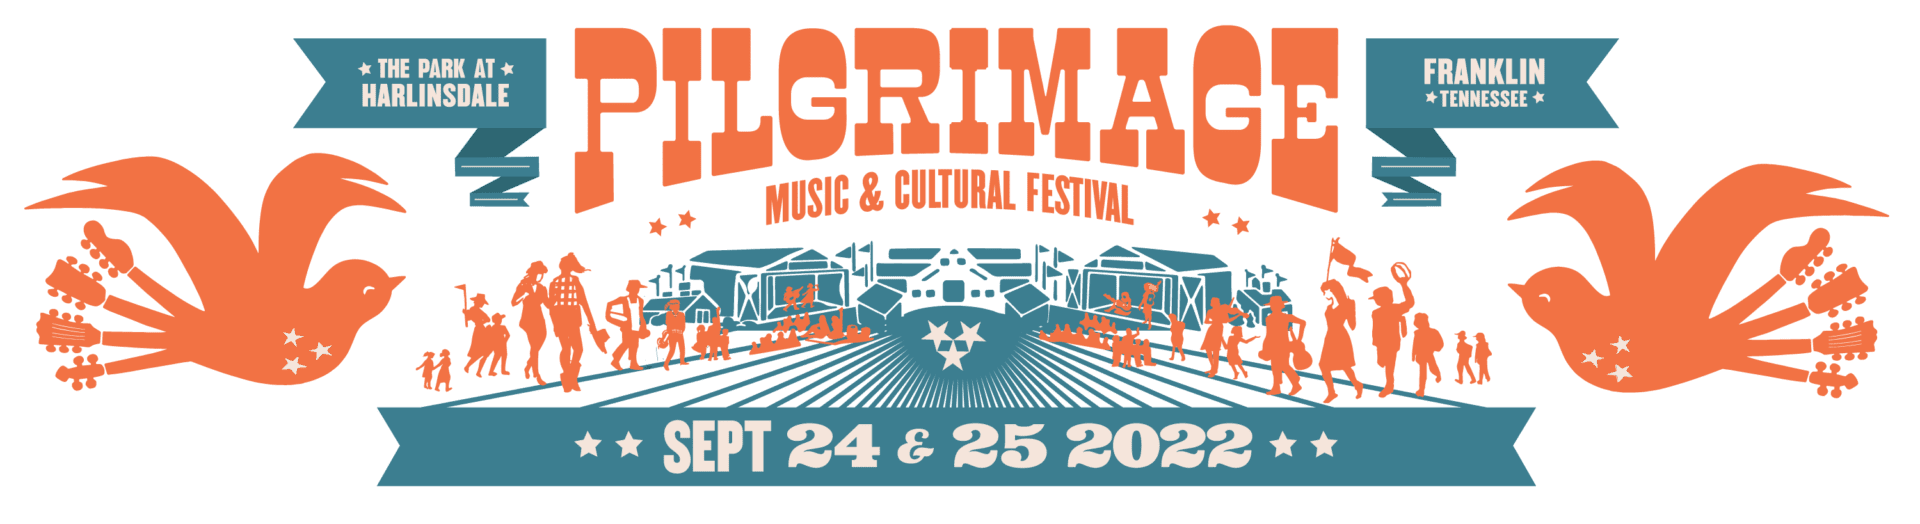 Pilgrimage Music and Cultural Festival Franklin, Tenn - Logo